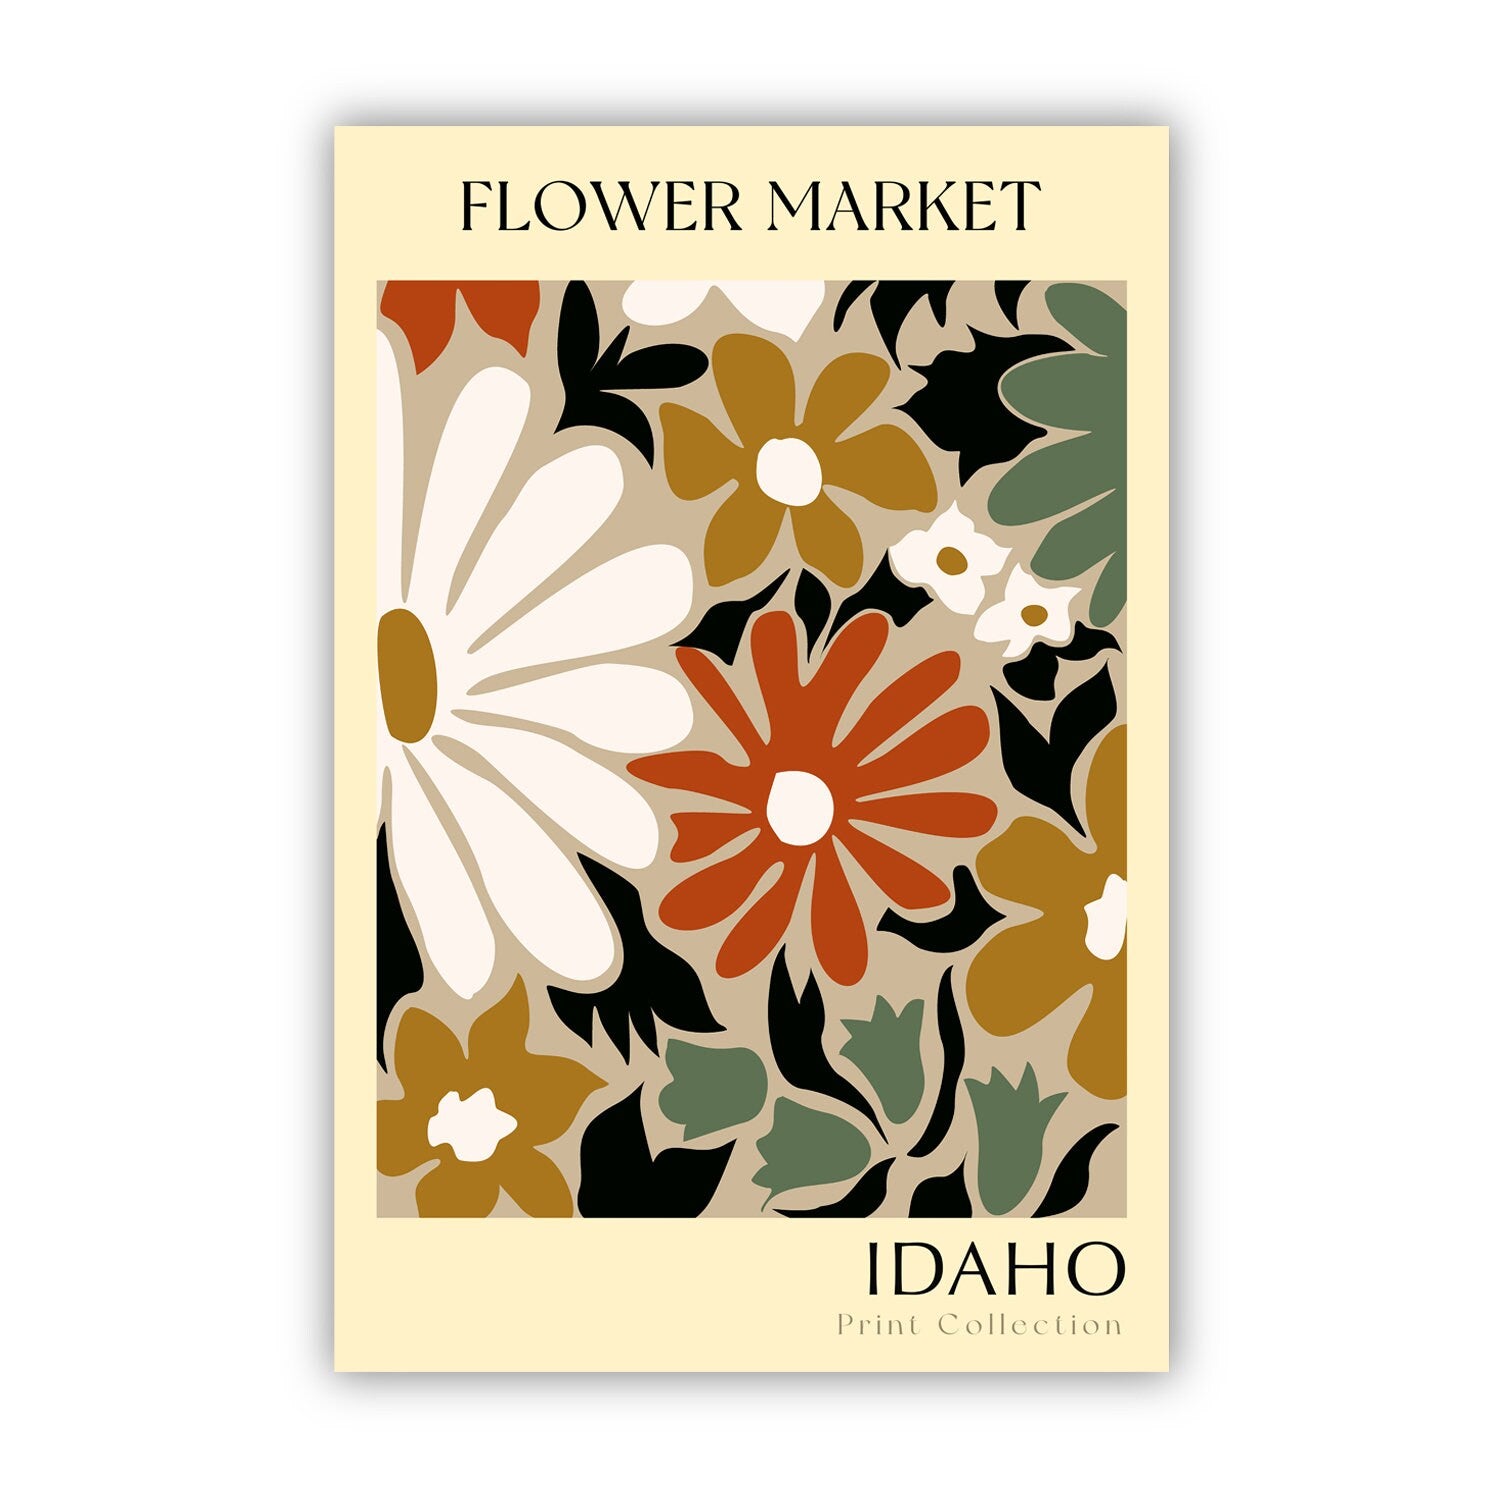 Idaho State flower print, USA states poster, Idaho flower market poster, Botanical posters, Nature poster artwork, Boho floral wall art